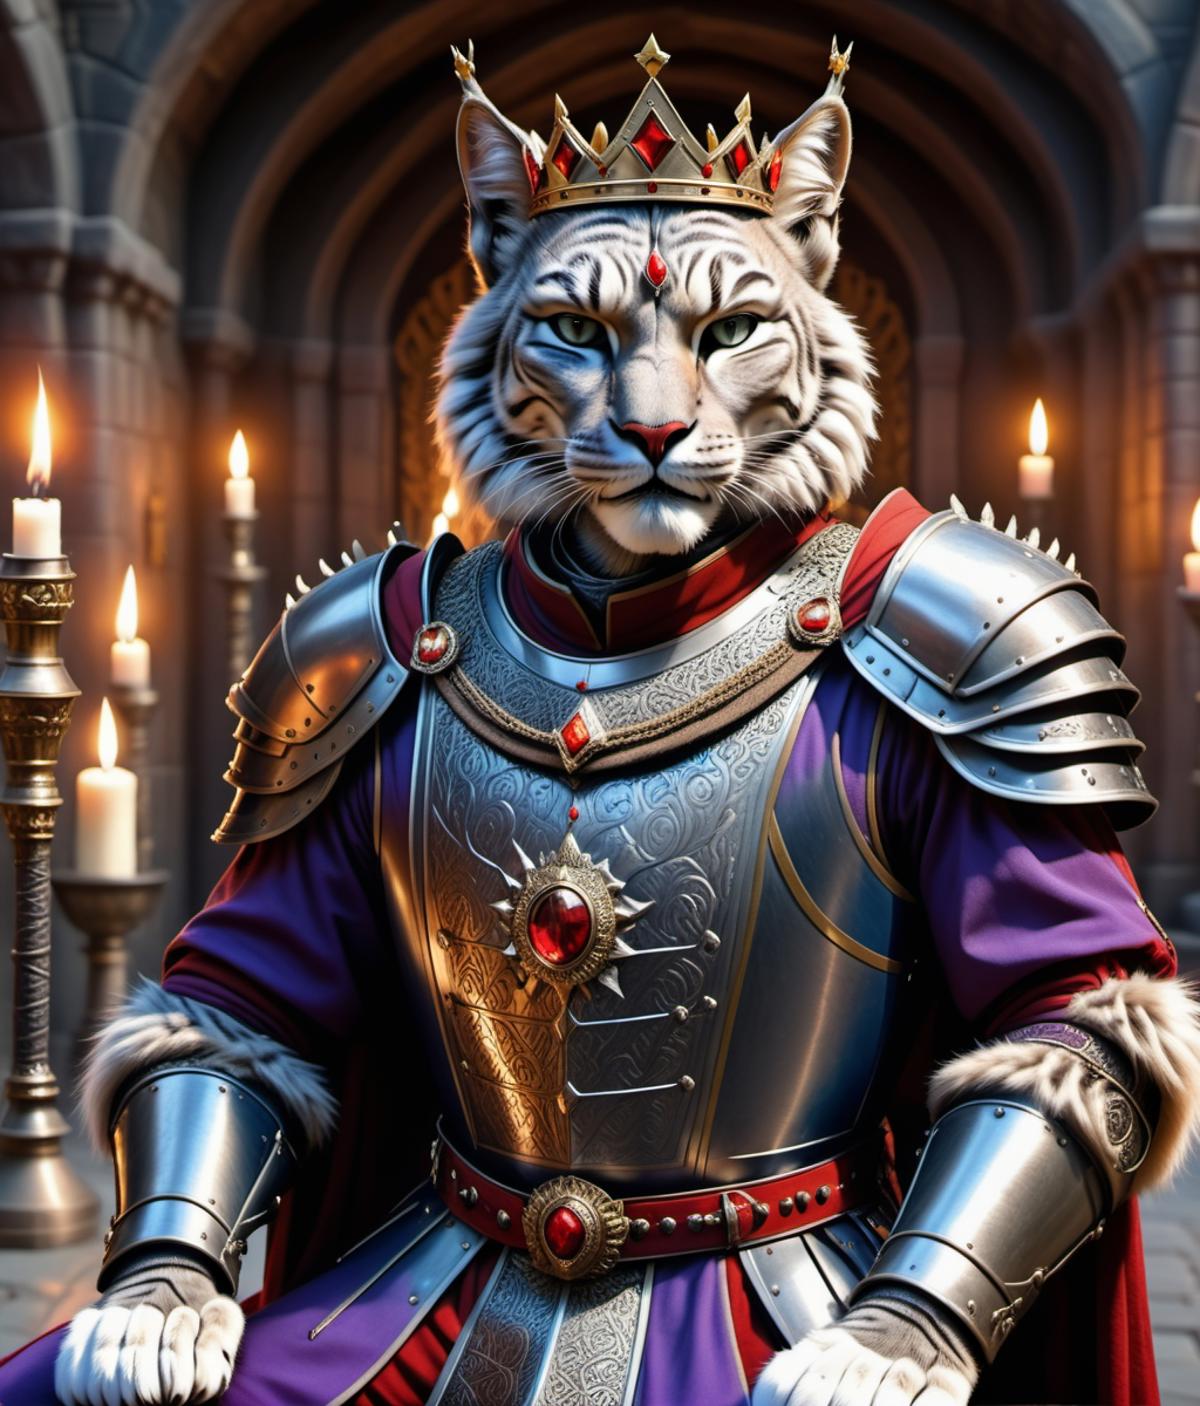 Realistic Feline Hybrids - Cat People image by Ben4Arts